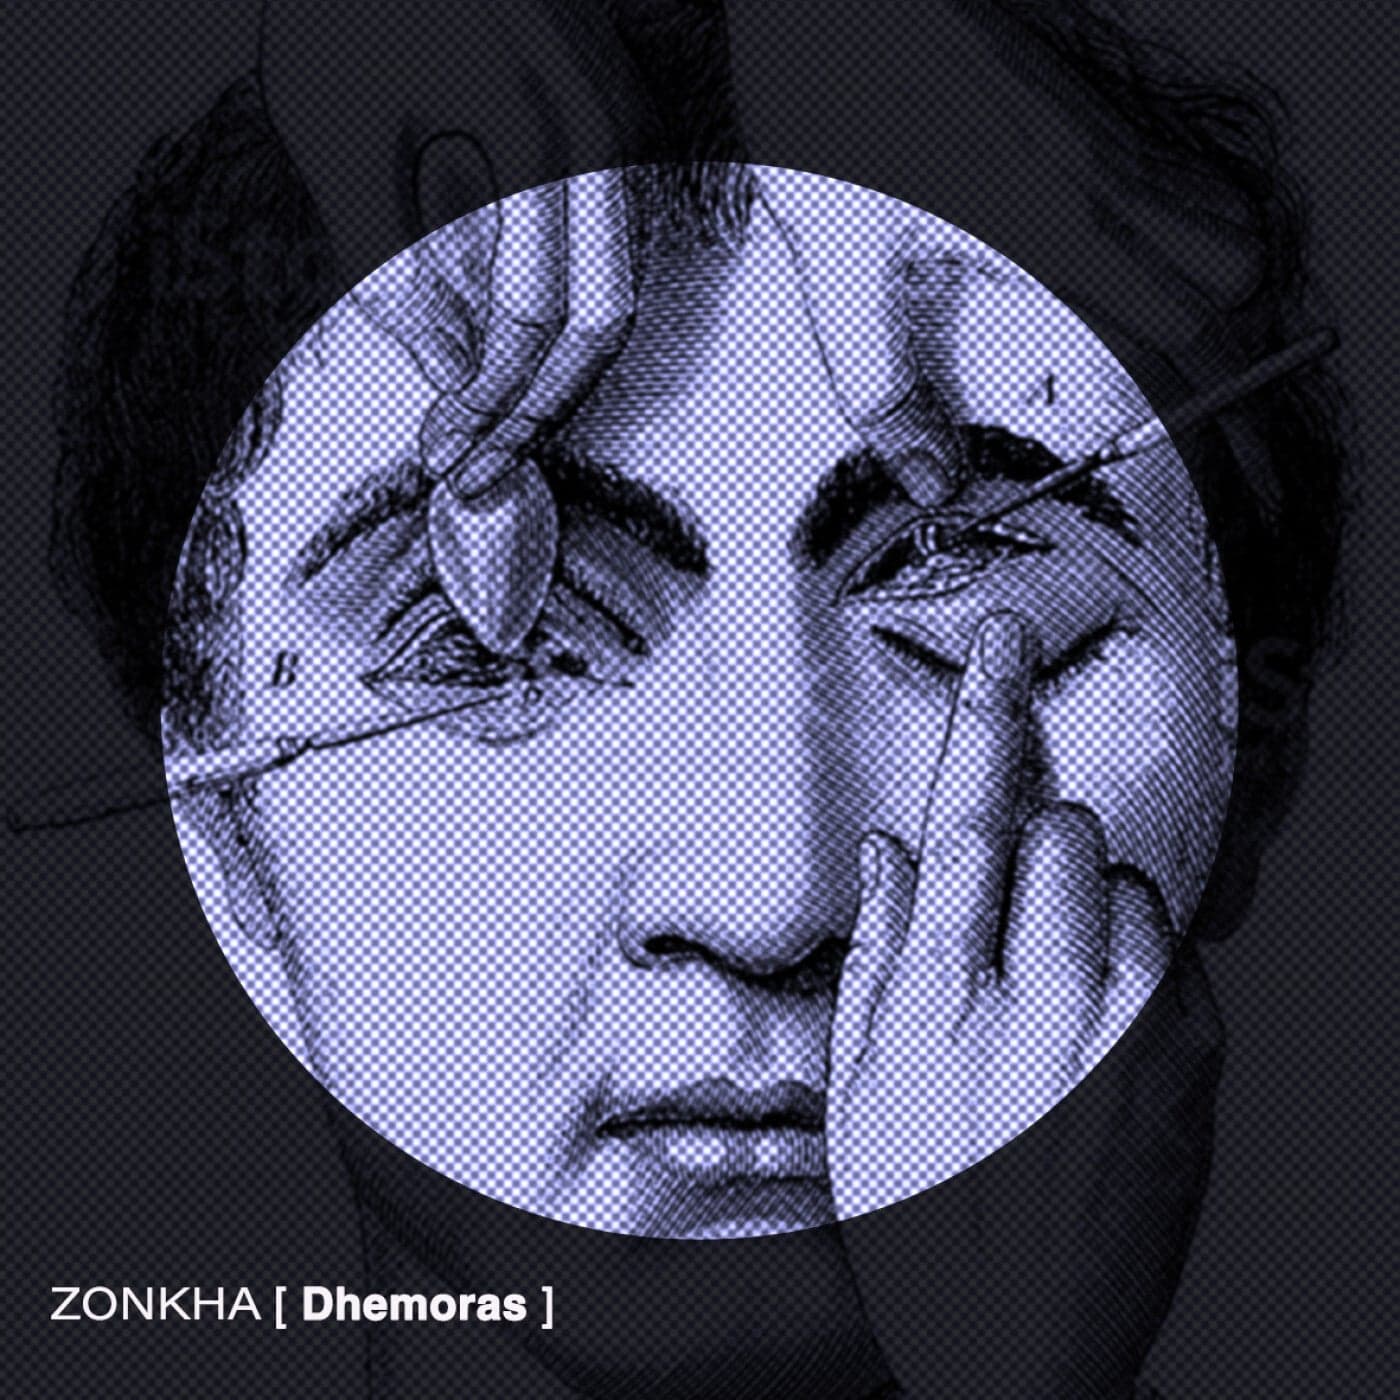 Download Zonkha - Dhemoras on Electrobuzz